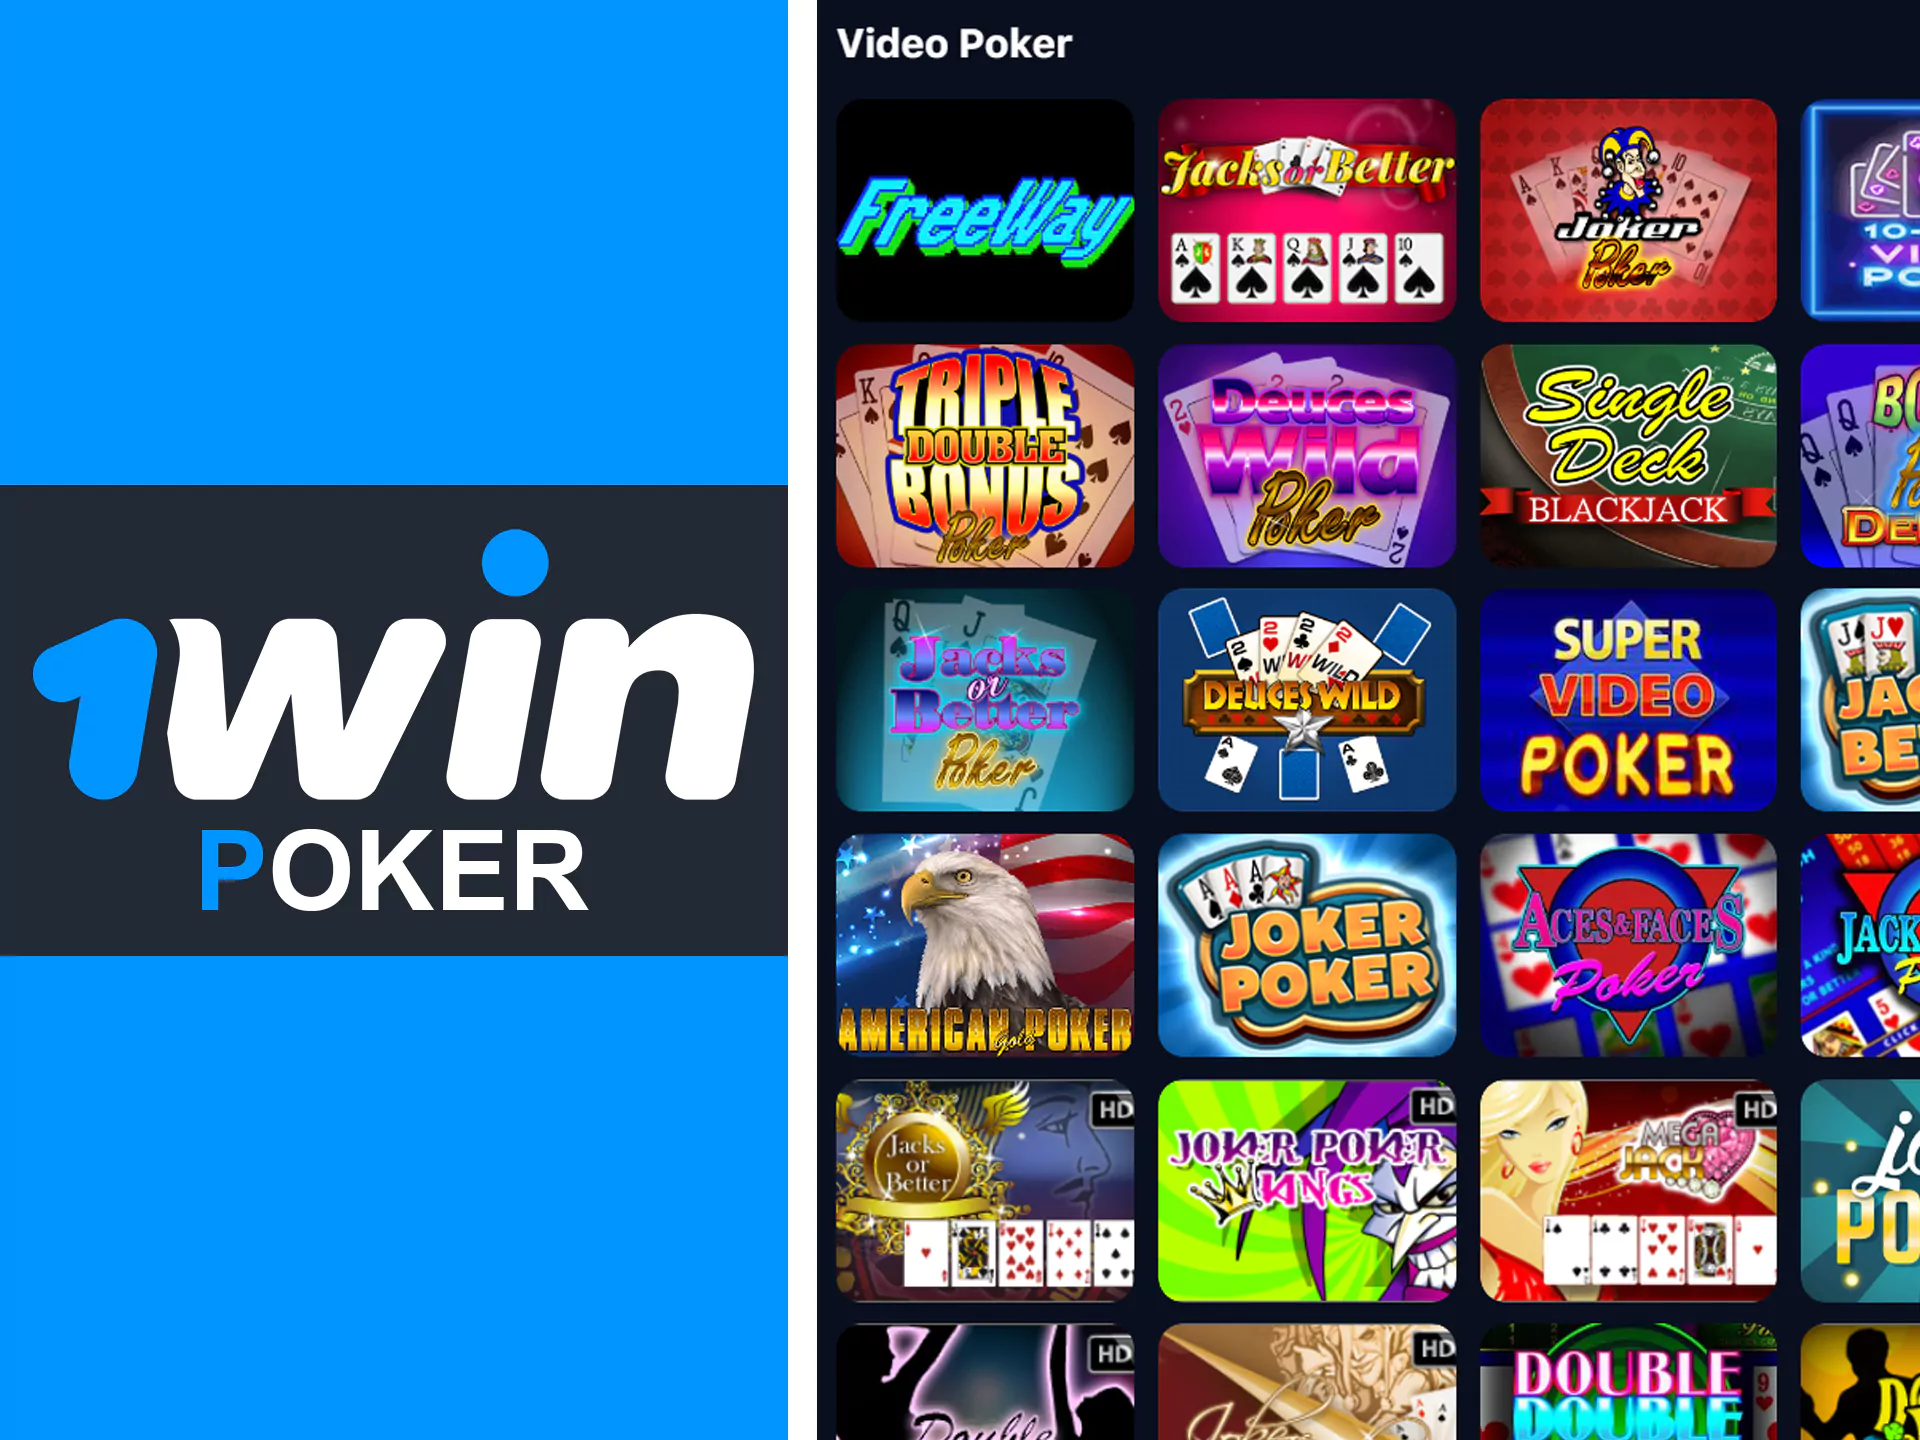 Play casino games at 1win.